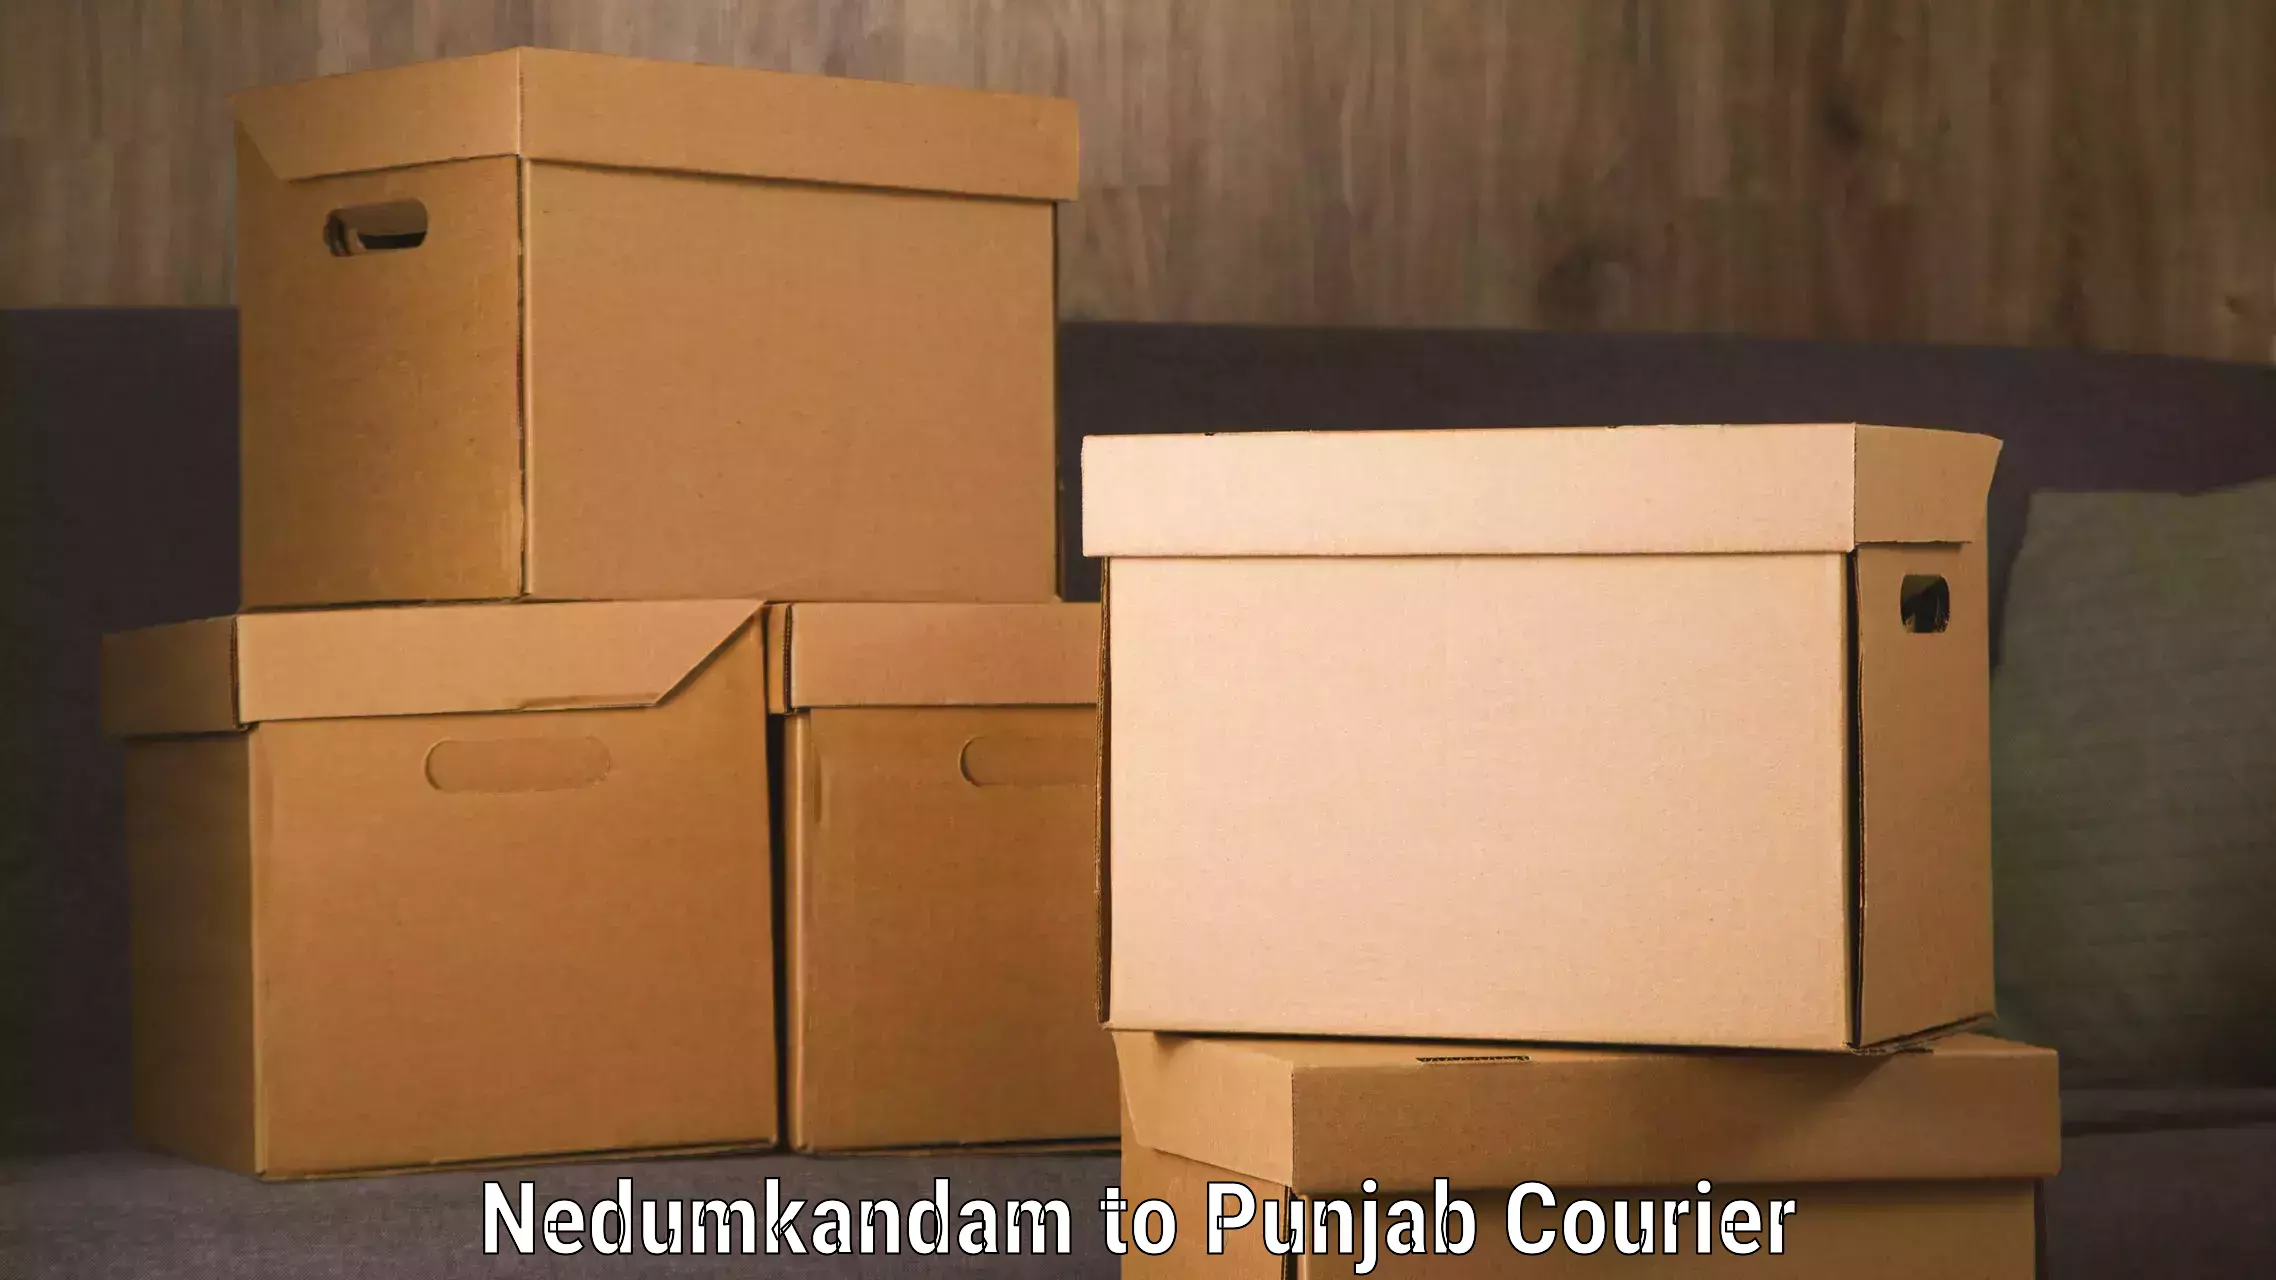 Efficient parcel service Nedumkandam to Malerkotla